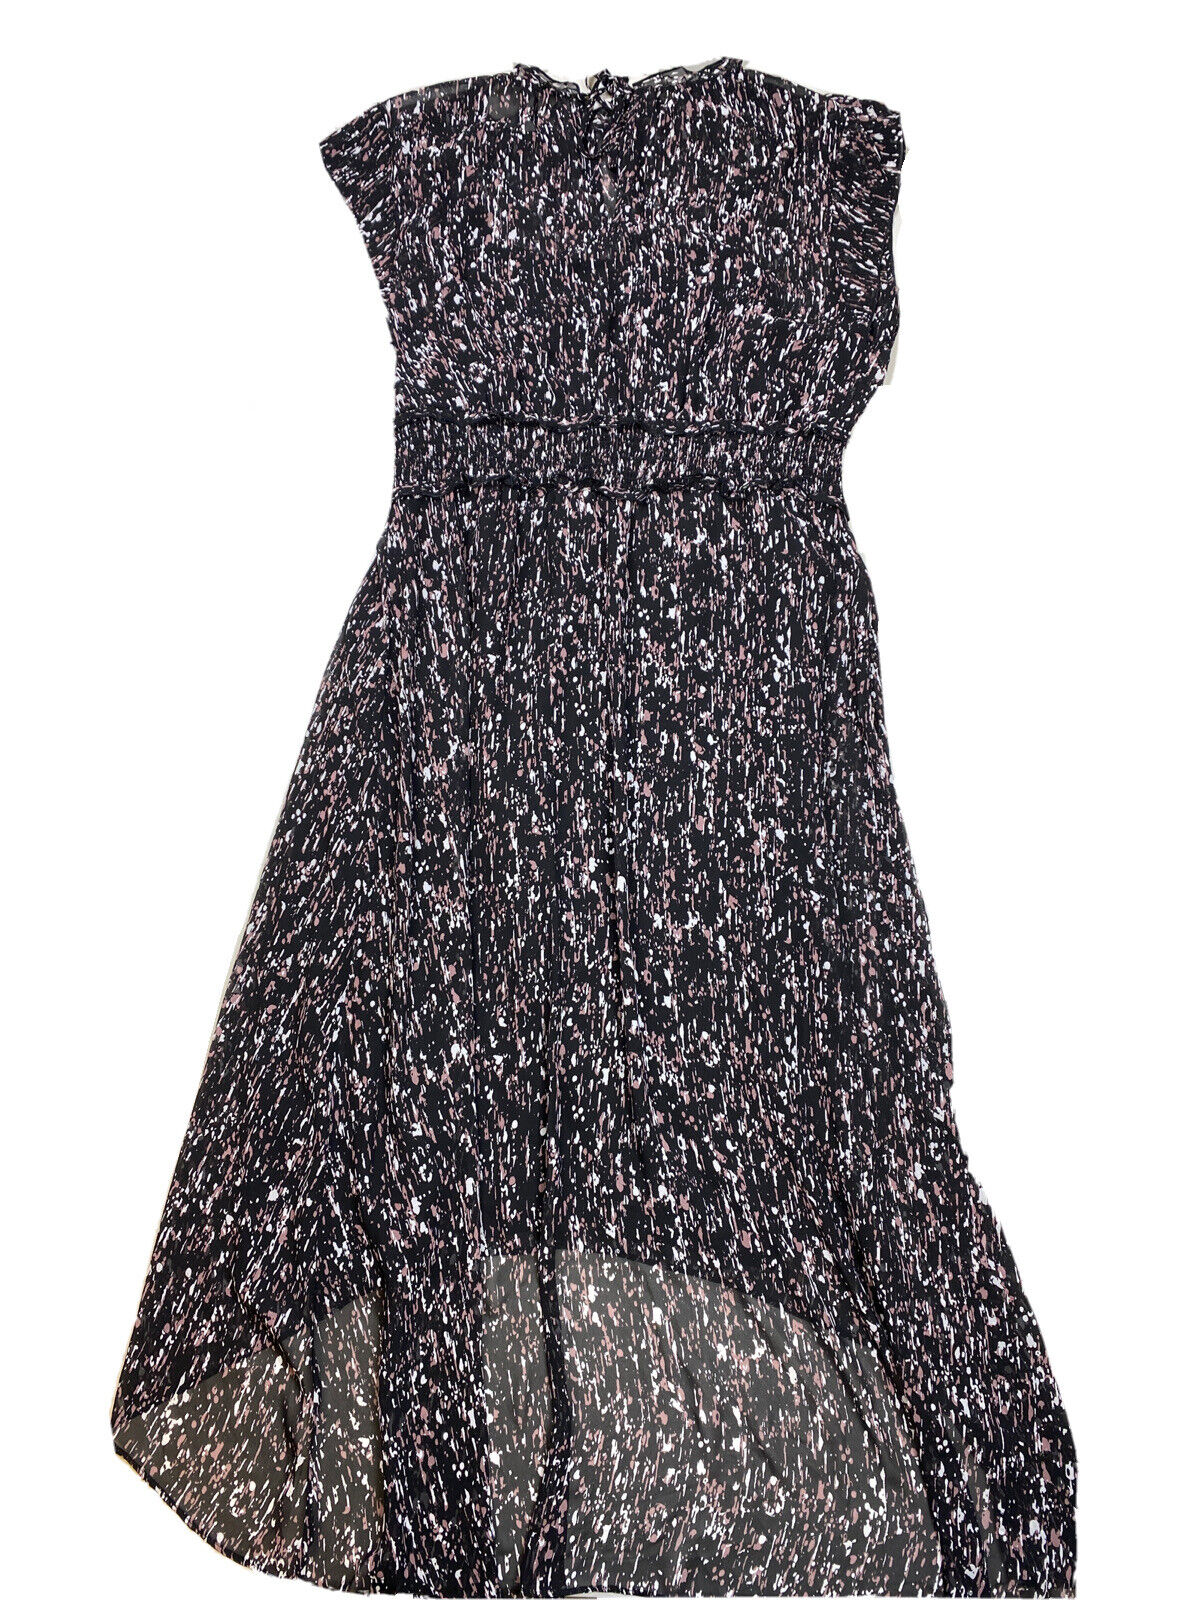 New Simply Vera Wang Women's Black Lined Sleeveless Maxi Dress - M